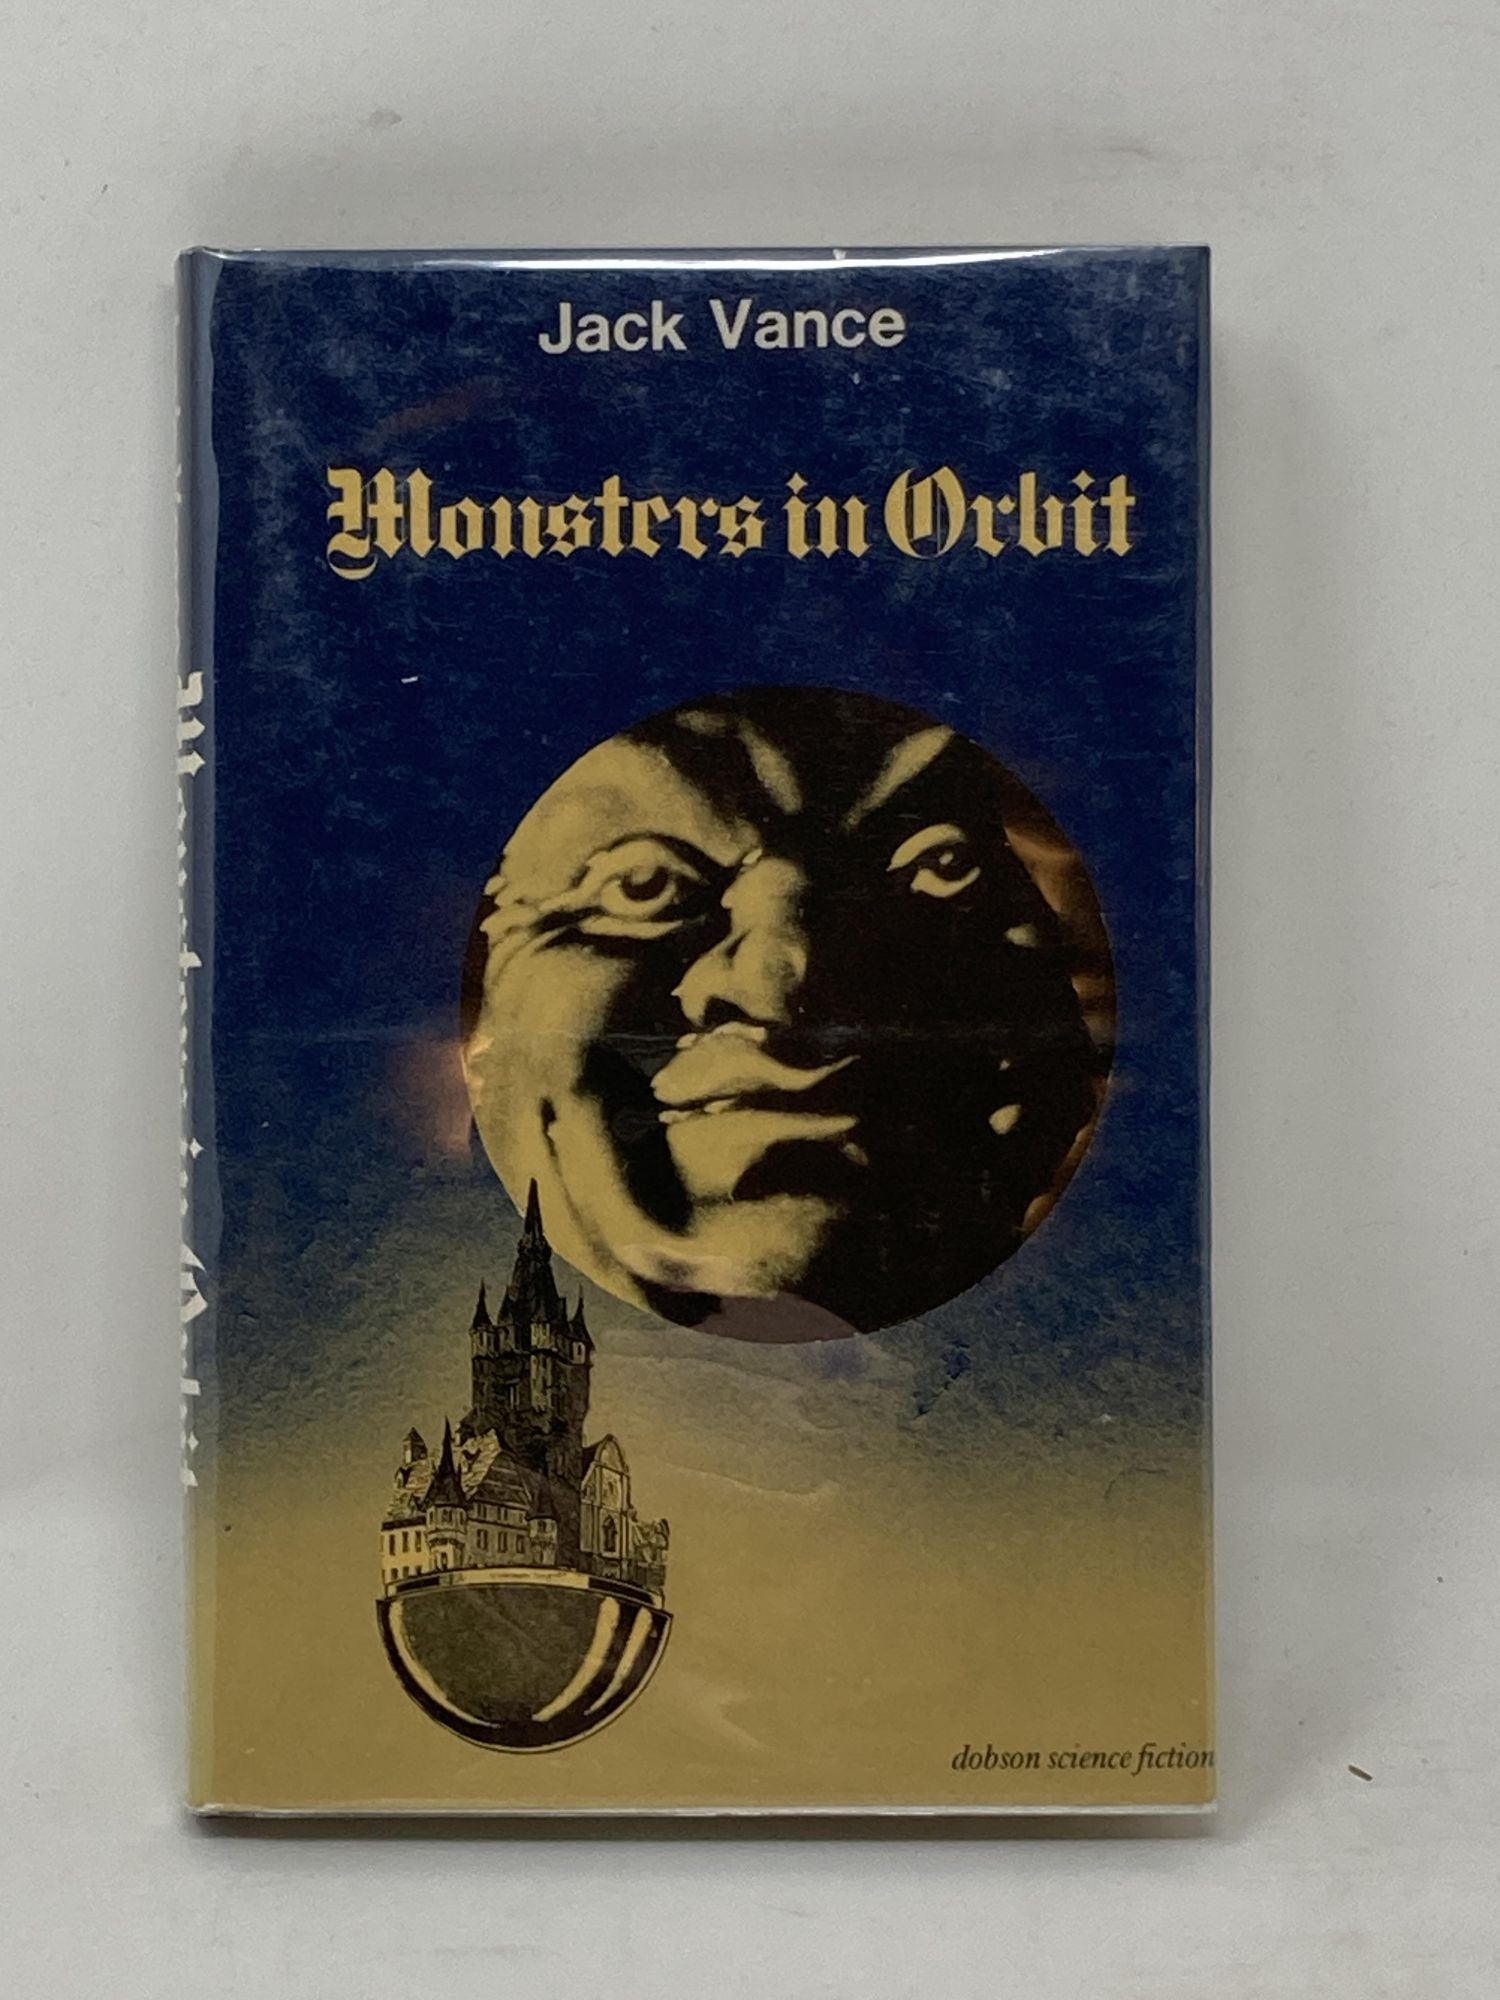 Vance, Jack - Monsters in Orbit